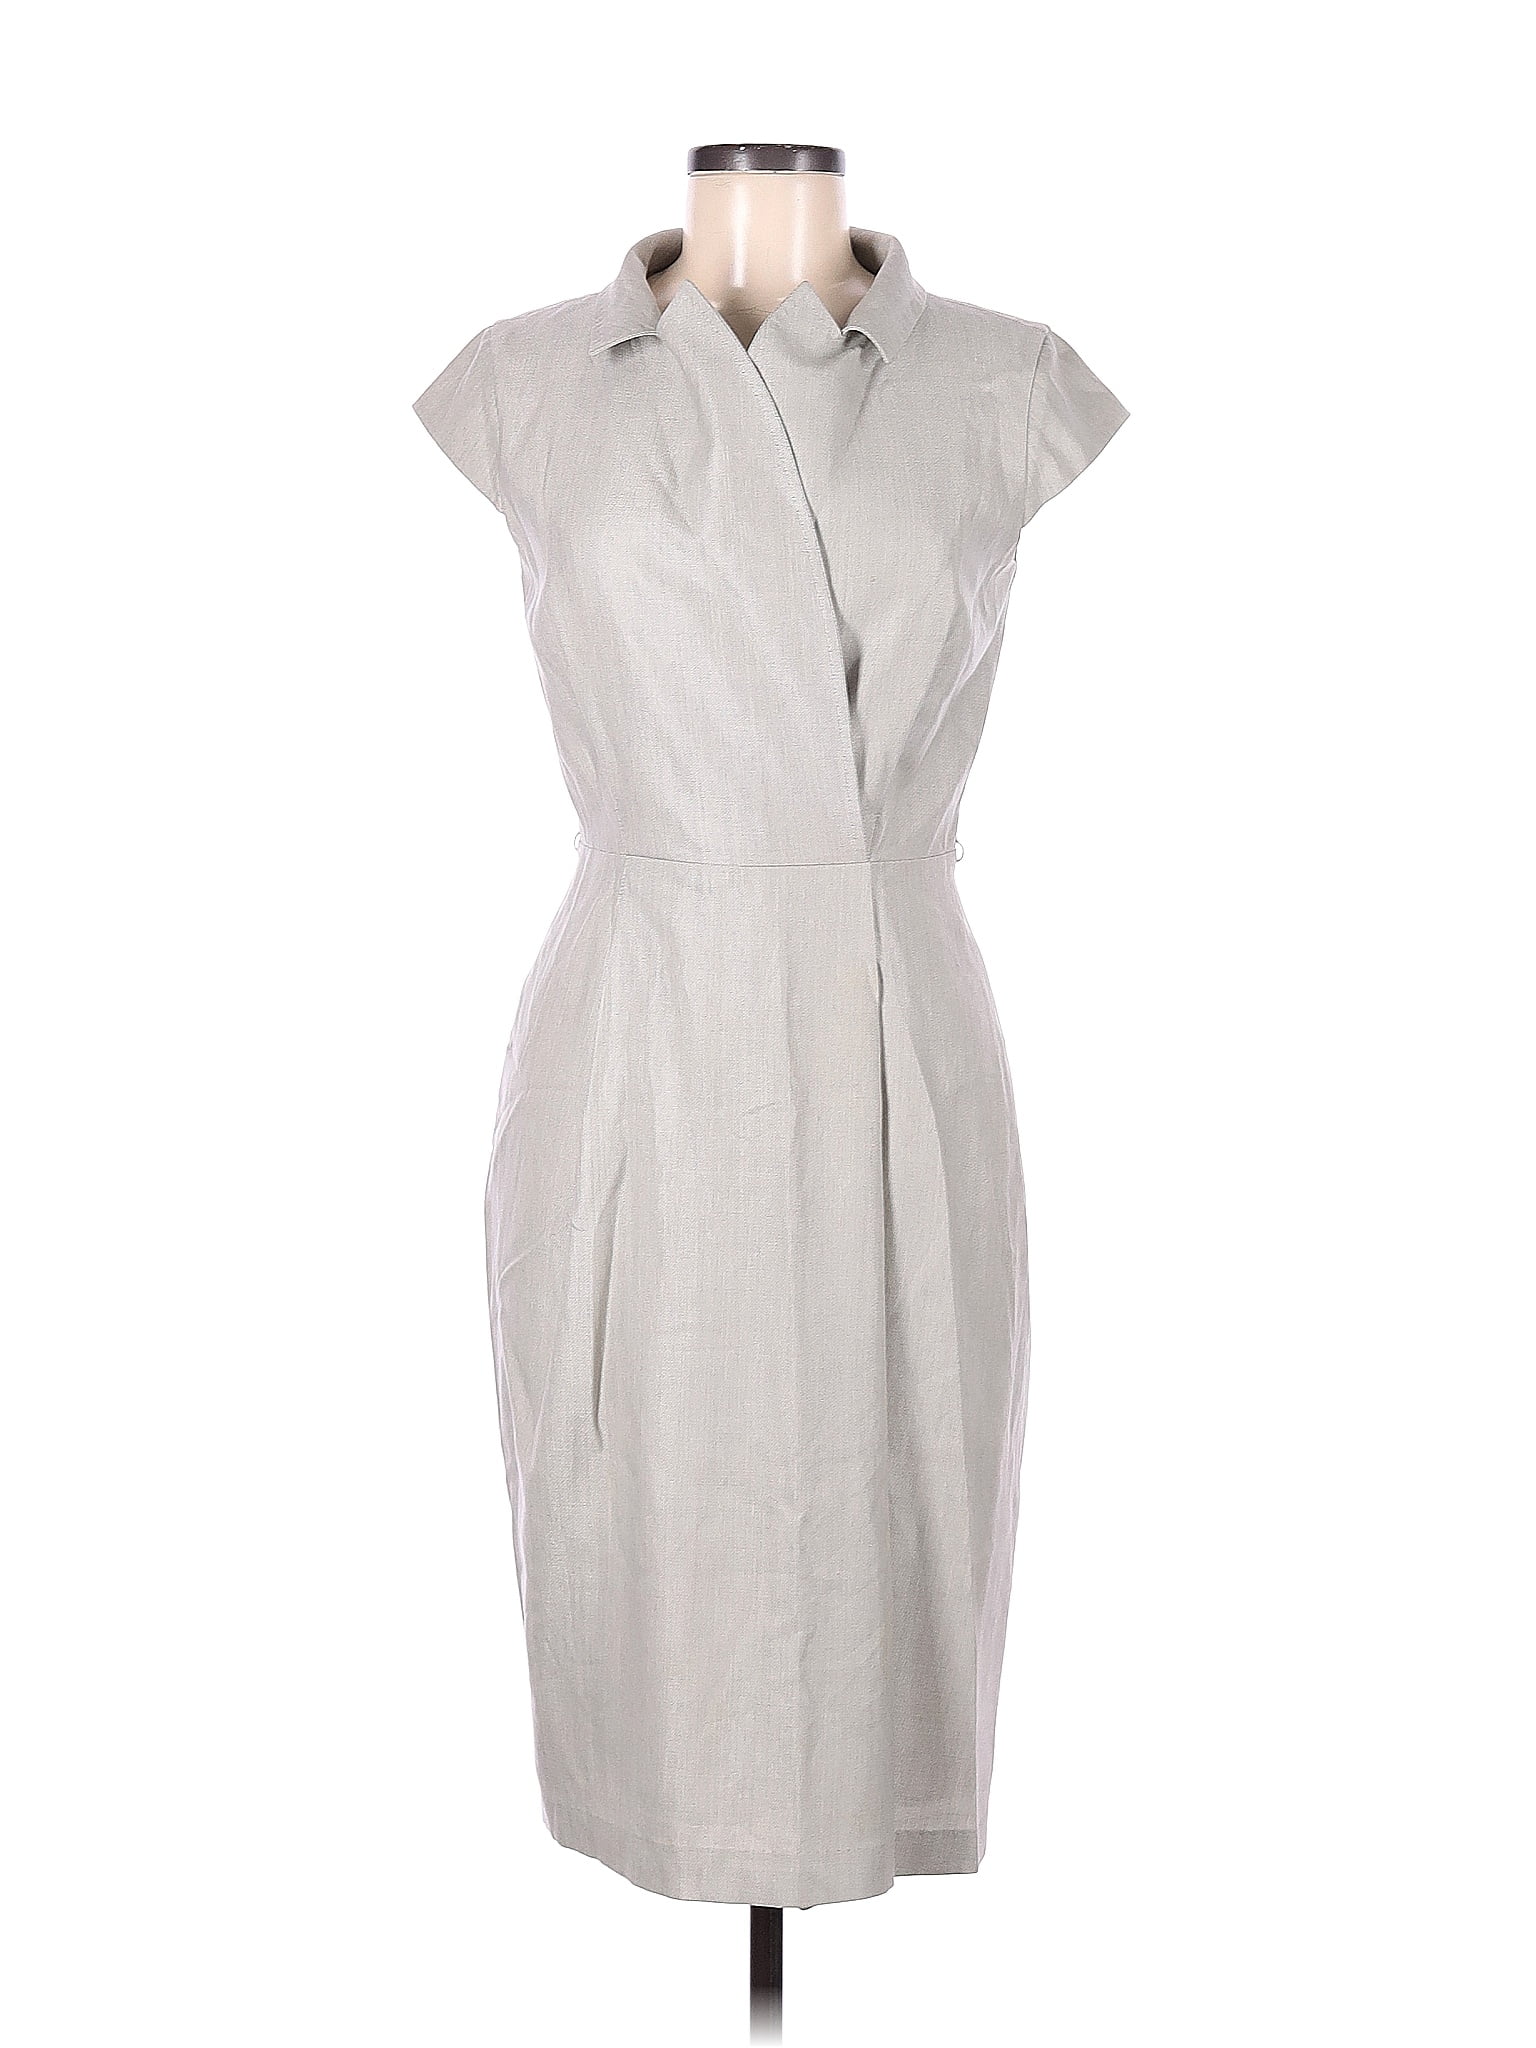 Max Mara Gray Casual Dress Size 8 - 84% off | thredUP